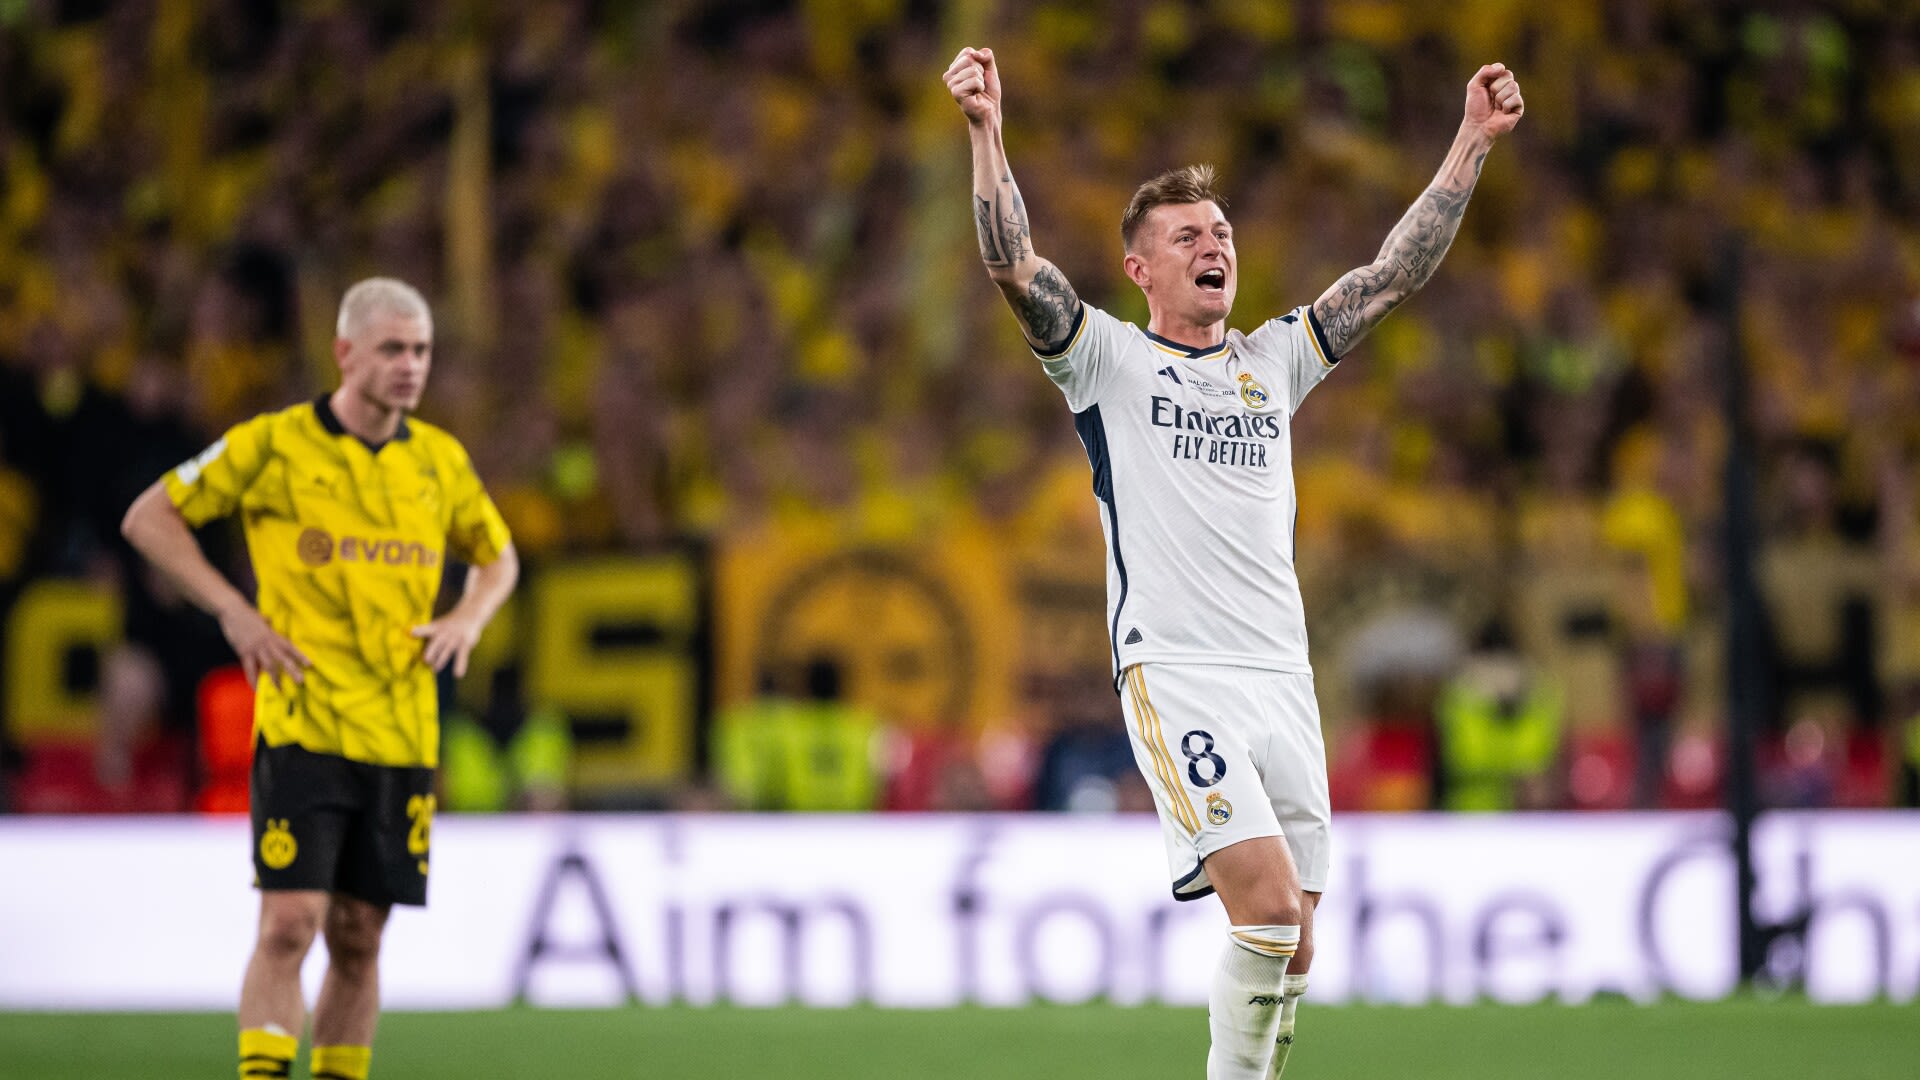 Borussia Dortmund 0-2 Real Madrid: An inevitable 15th Champions League, European title